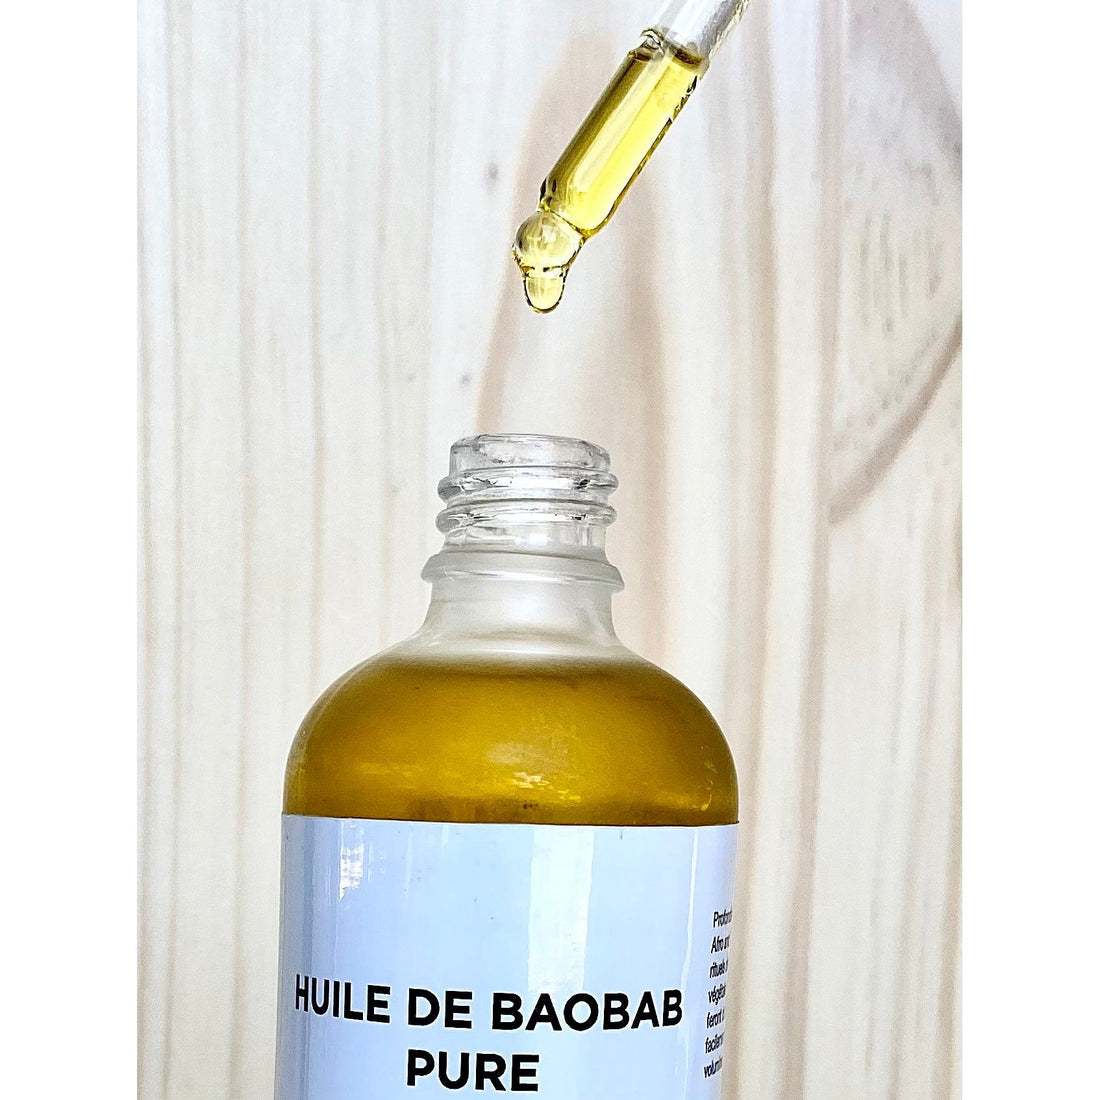 Baobab vegetable oil